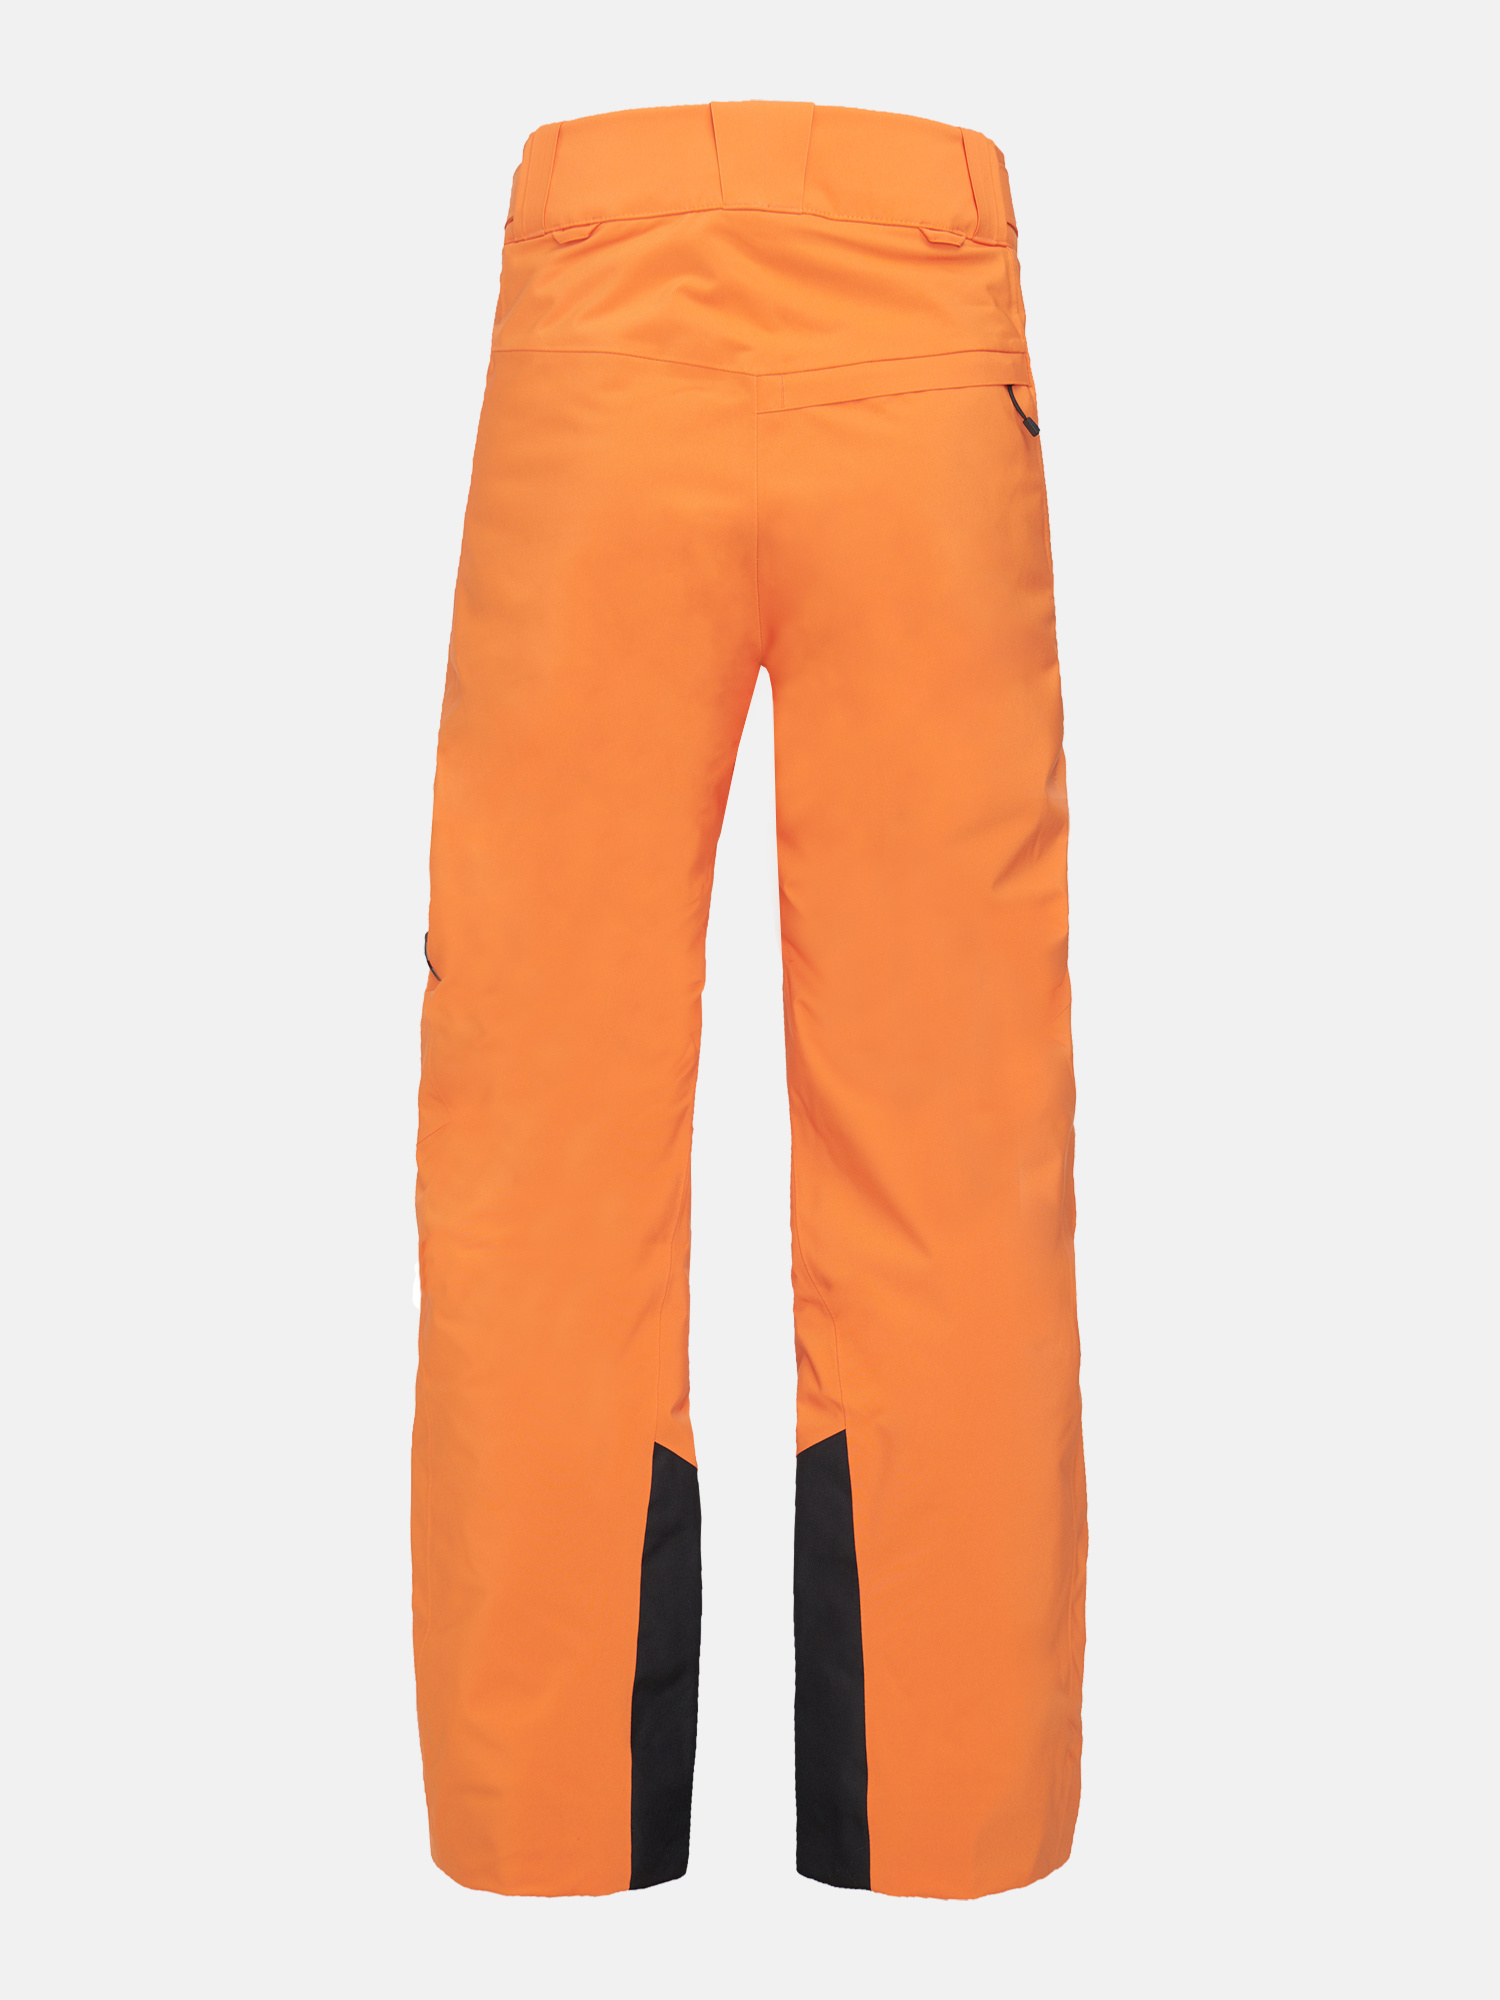 Peak Performance Men's Maroon Pant – Orange Altitude - Free Style Sport